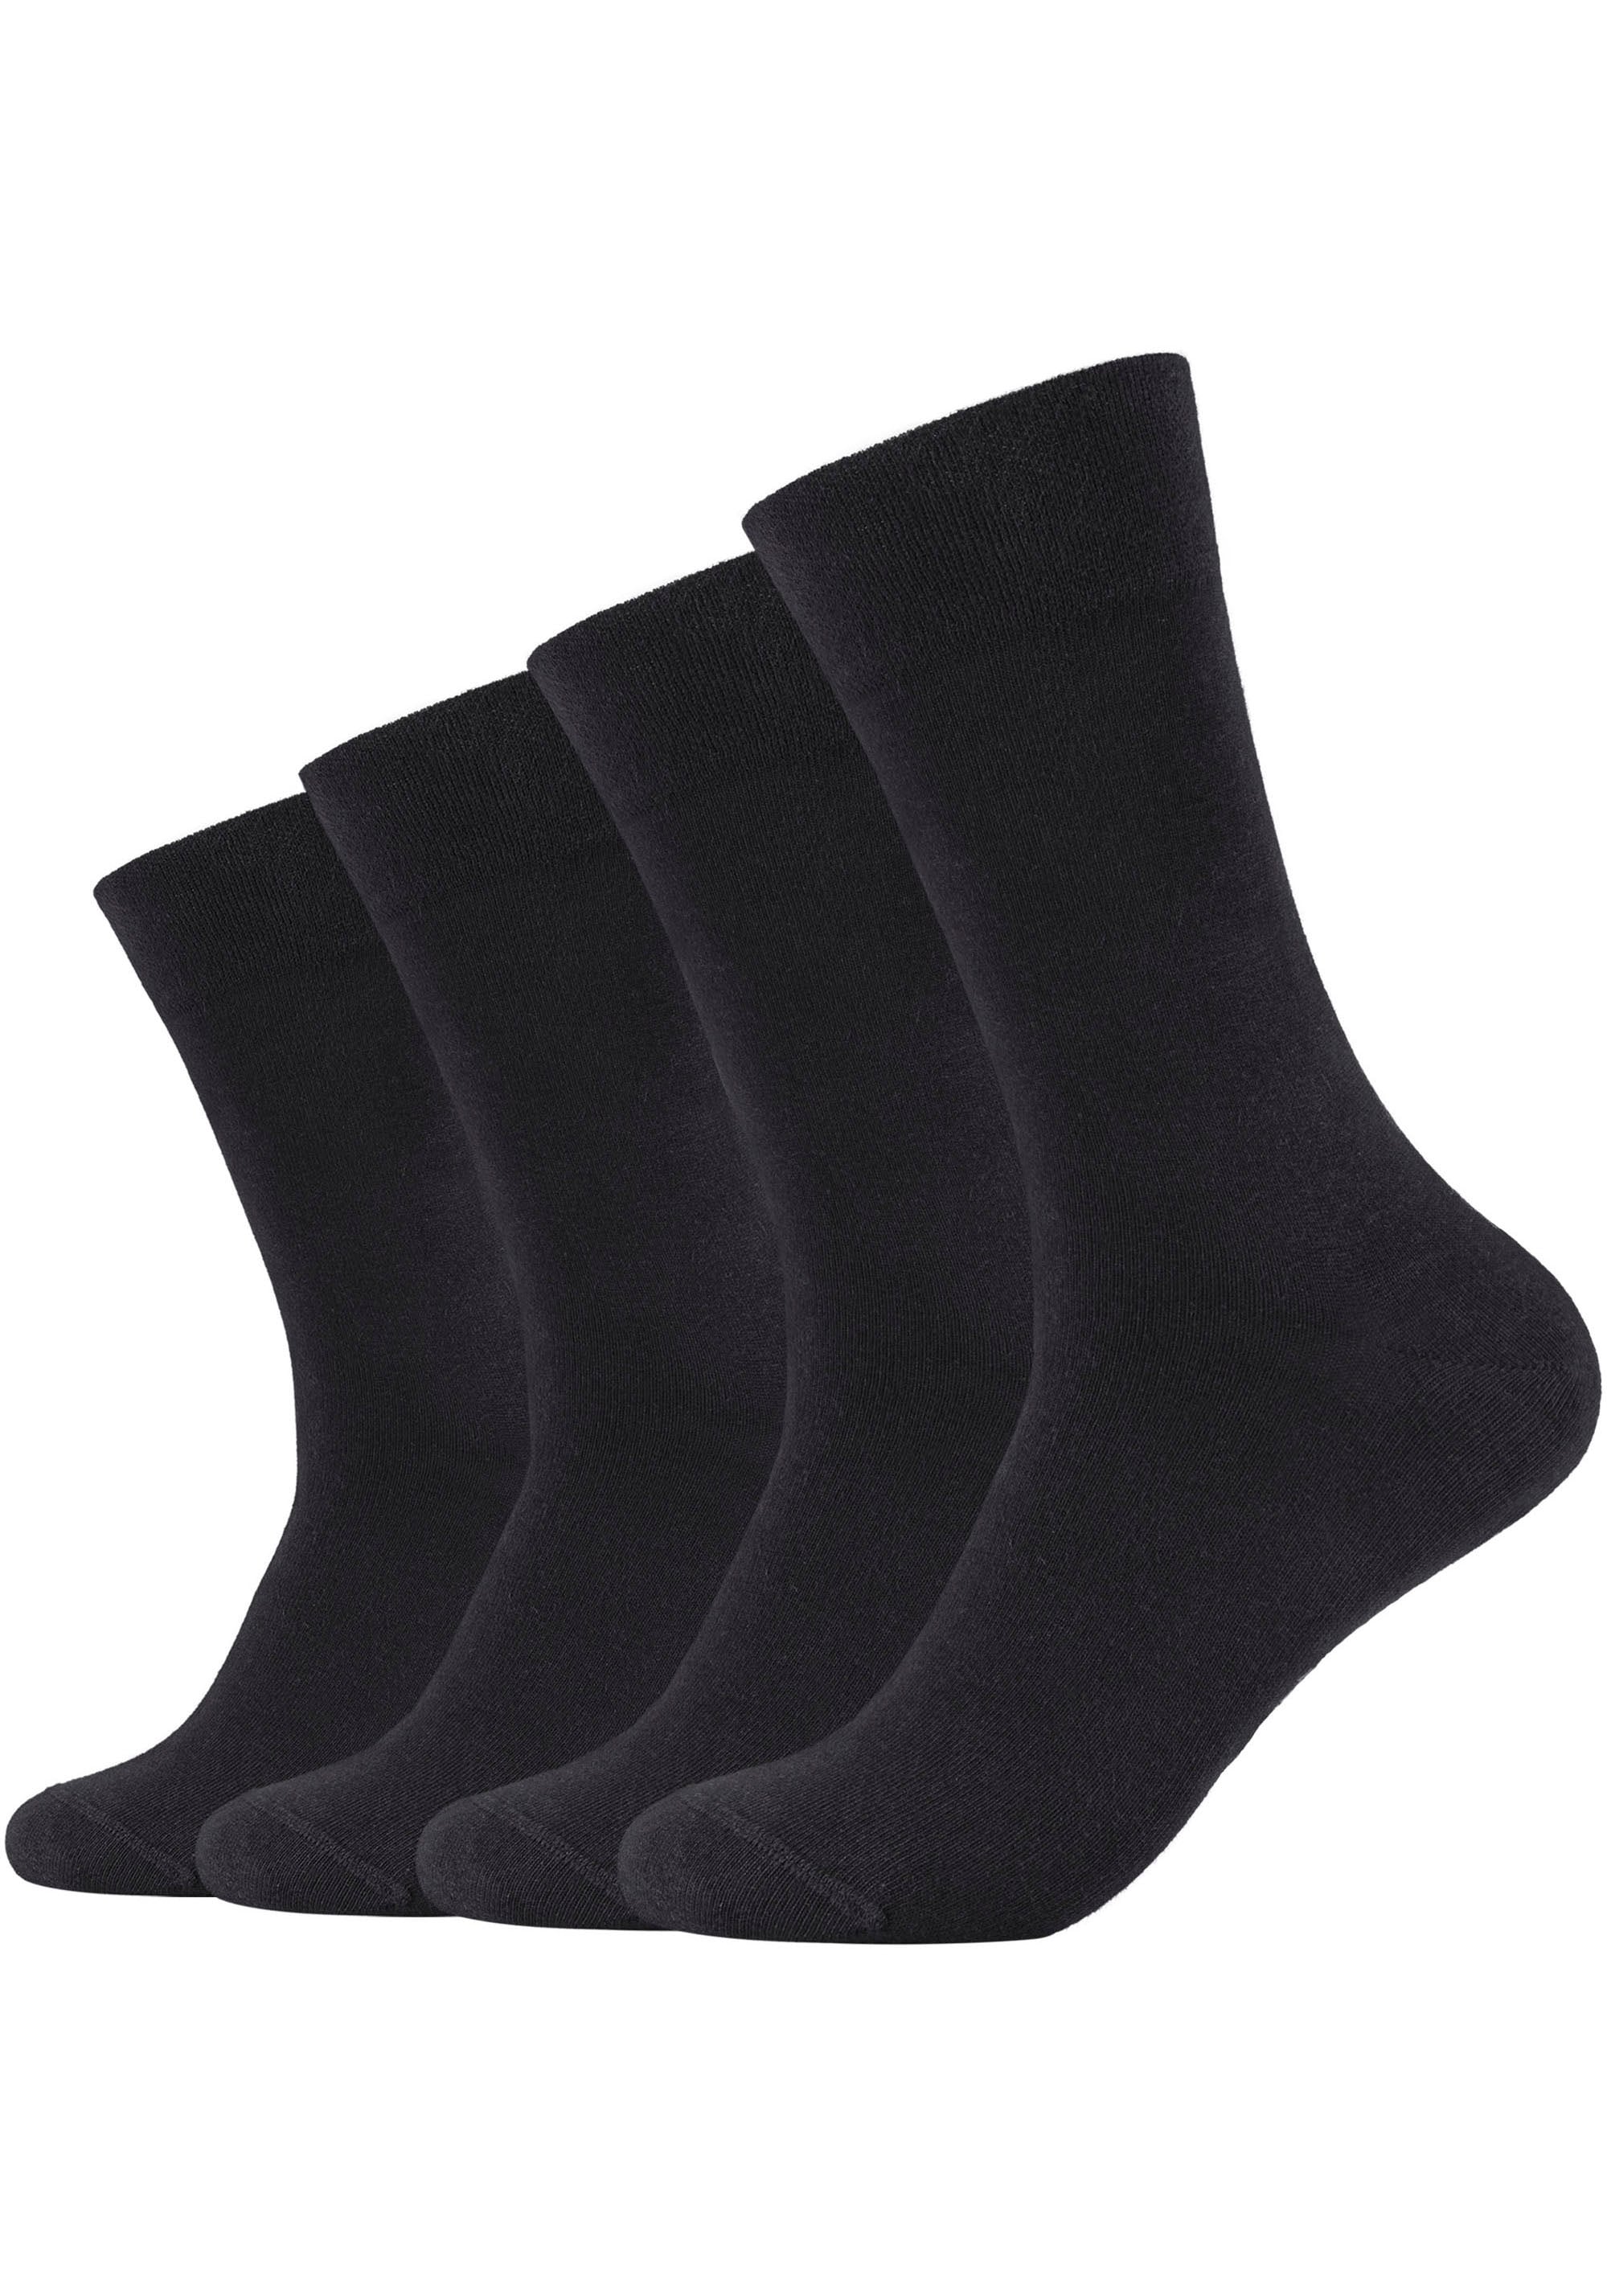 (Packung, Camano Paar), bestellen 4 97% Atmungsaktiv: Bio-Baumwolle Socken,